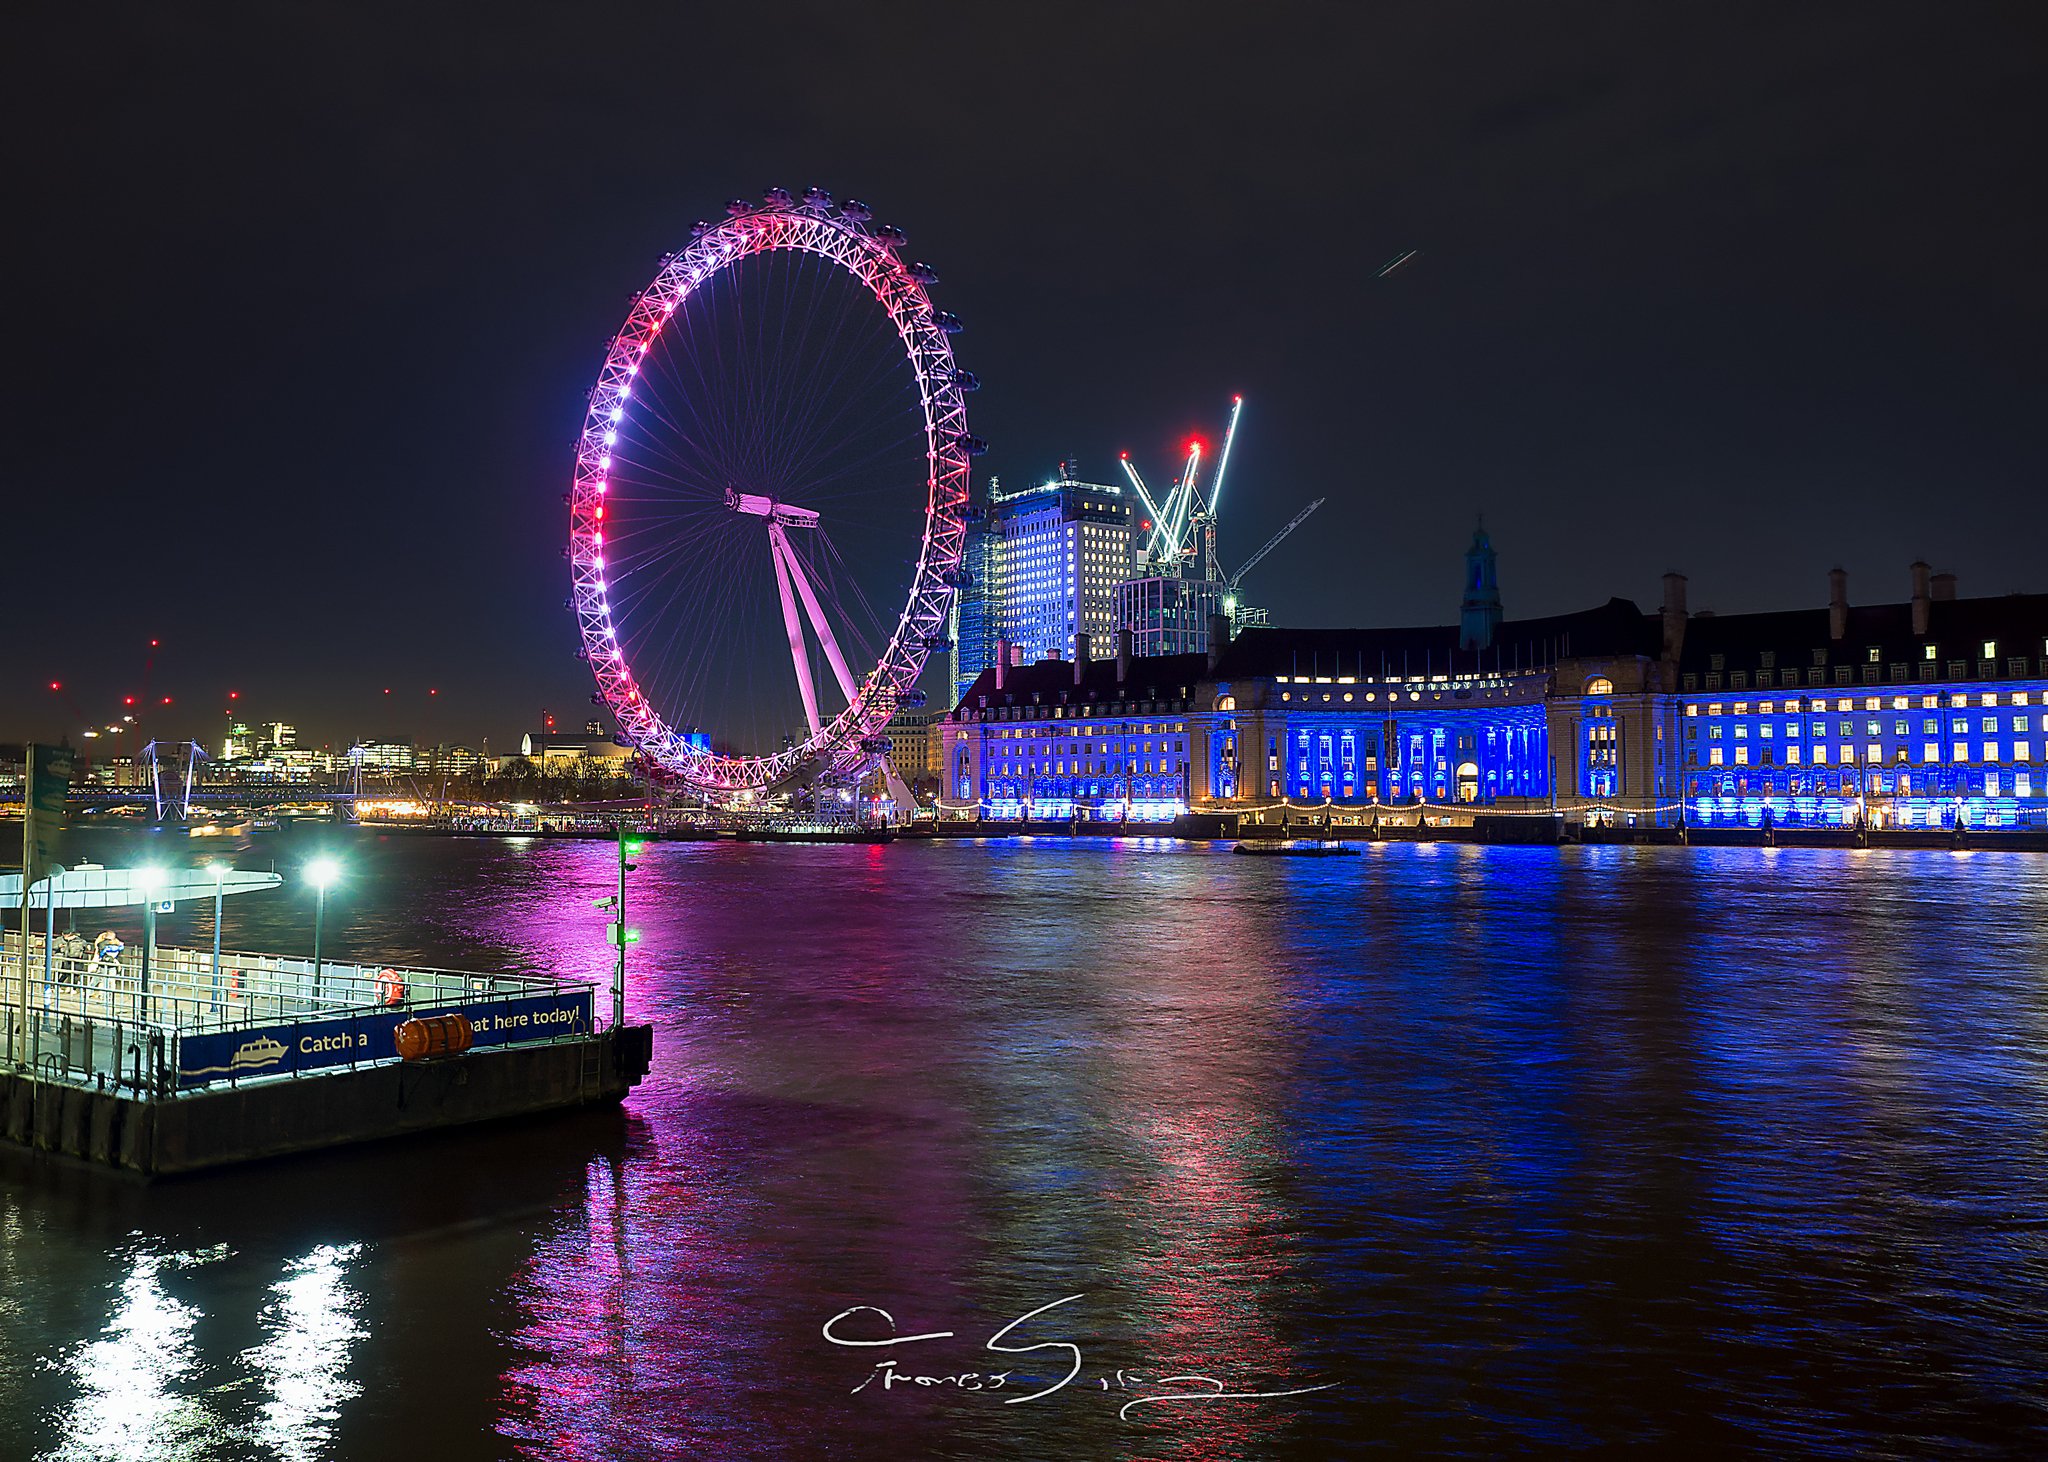 London Eye and its lights...